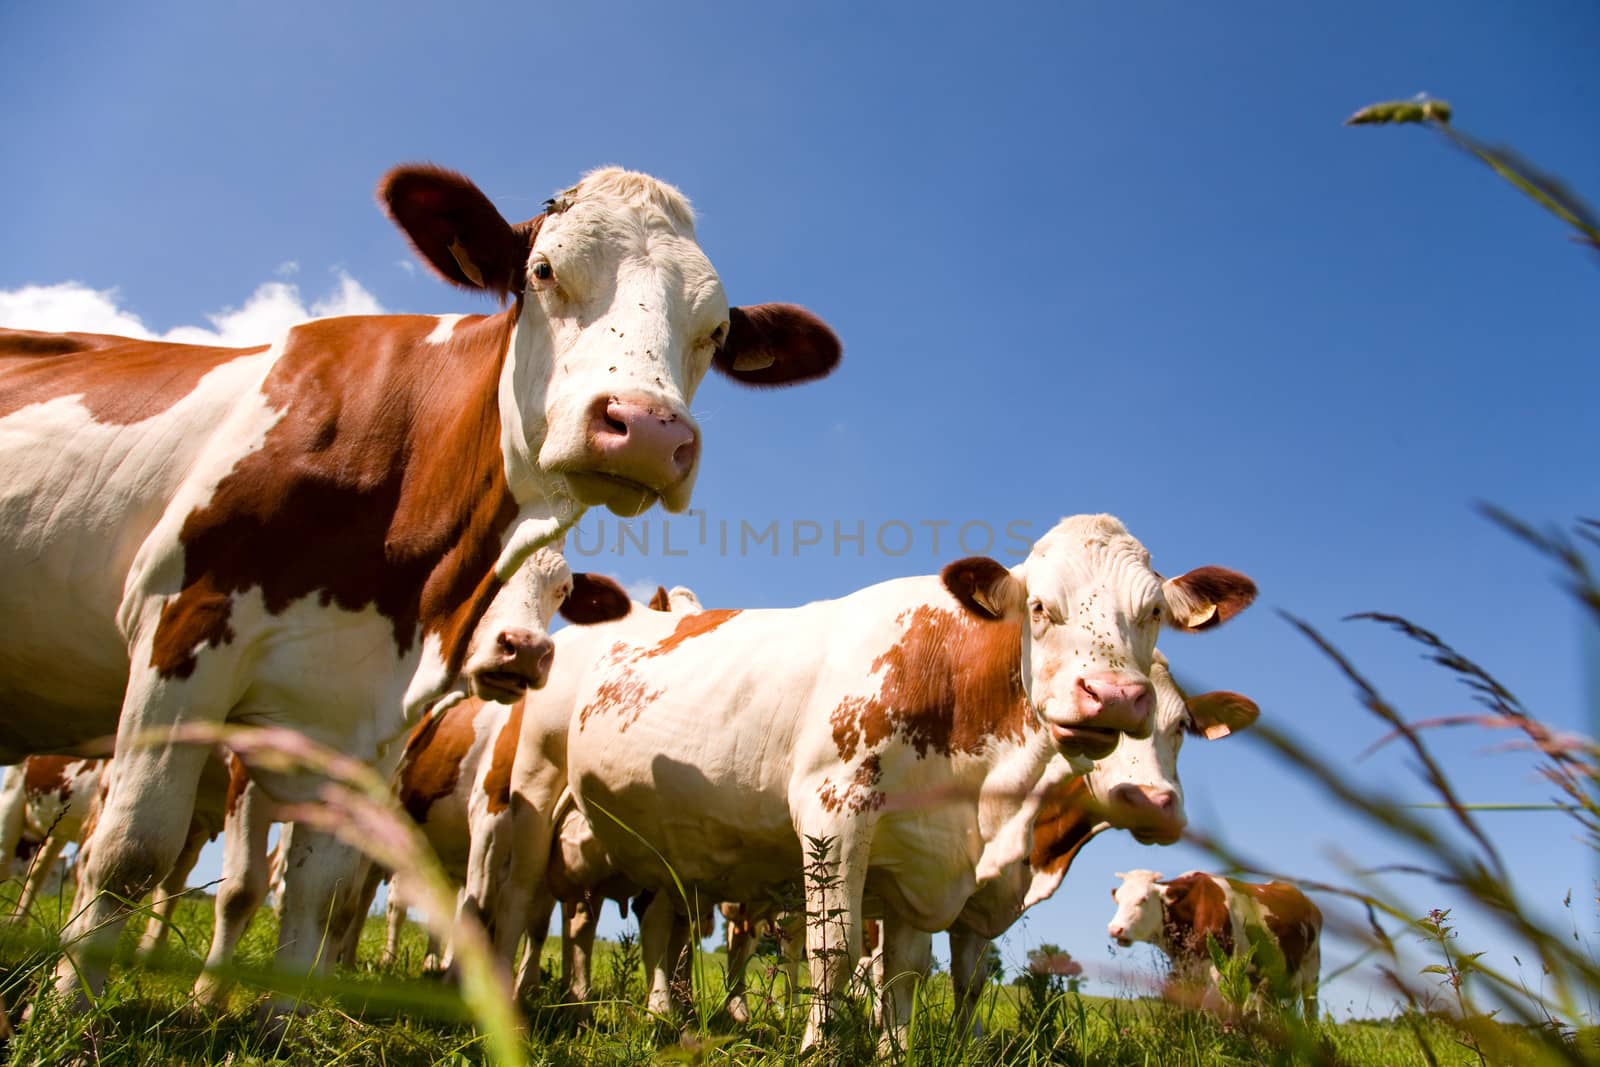 Montb�liarde cattle in the meadow